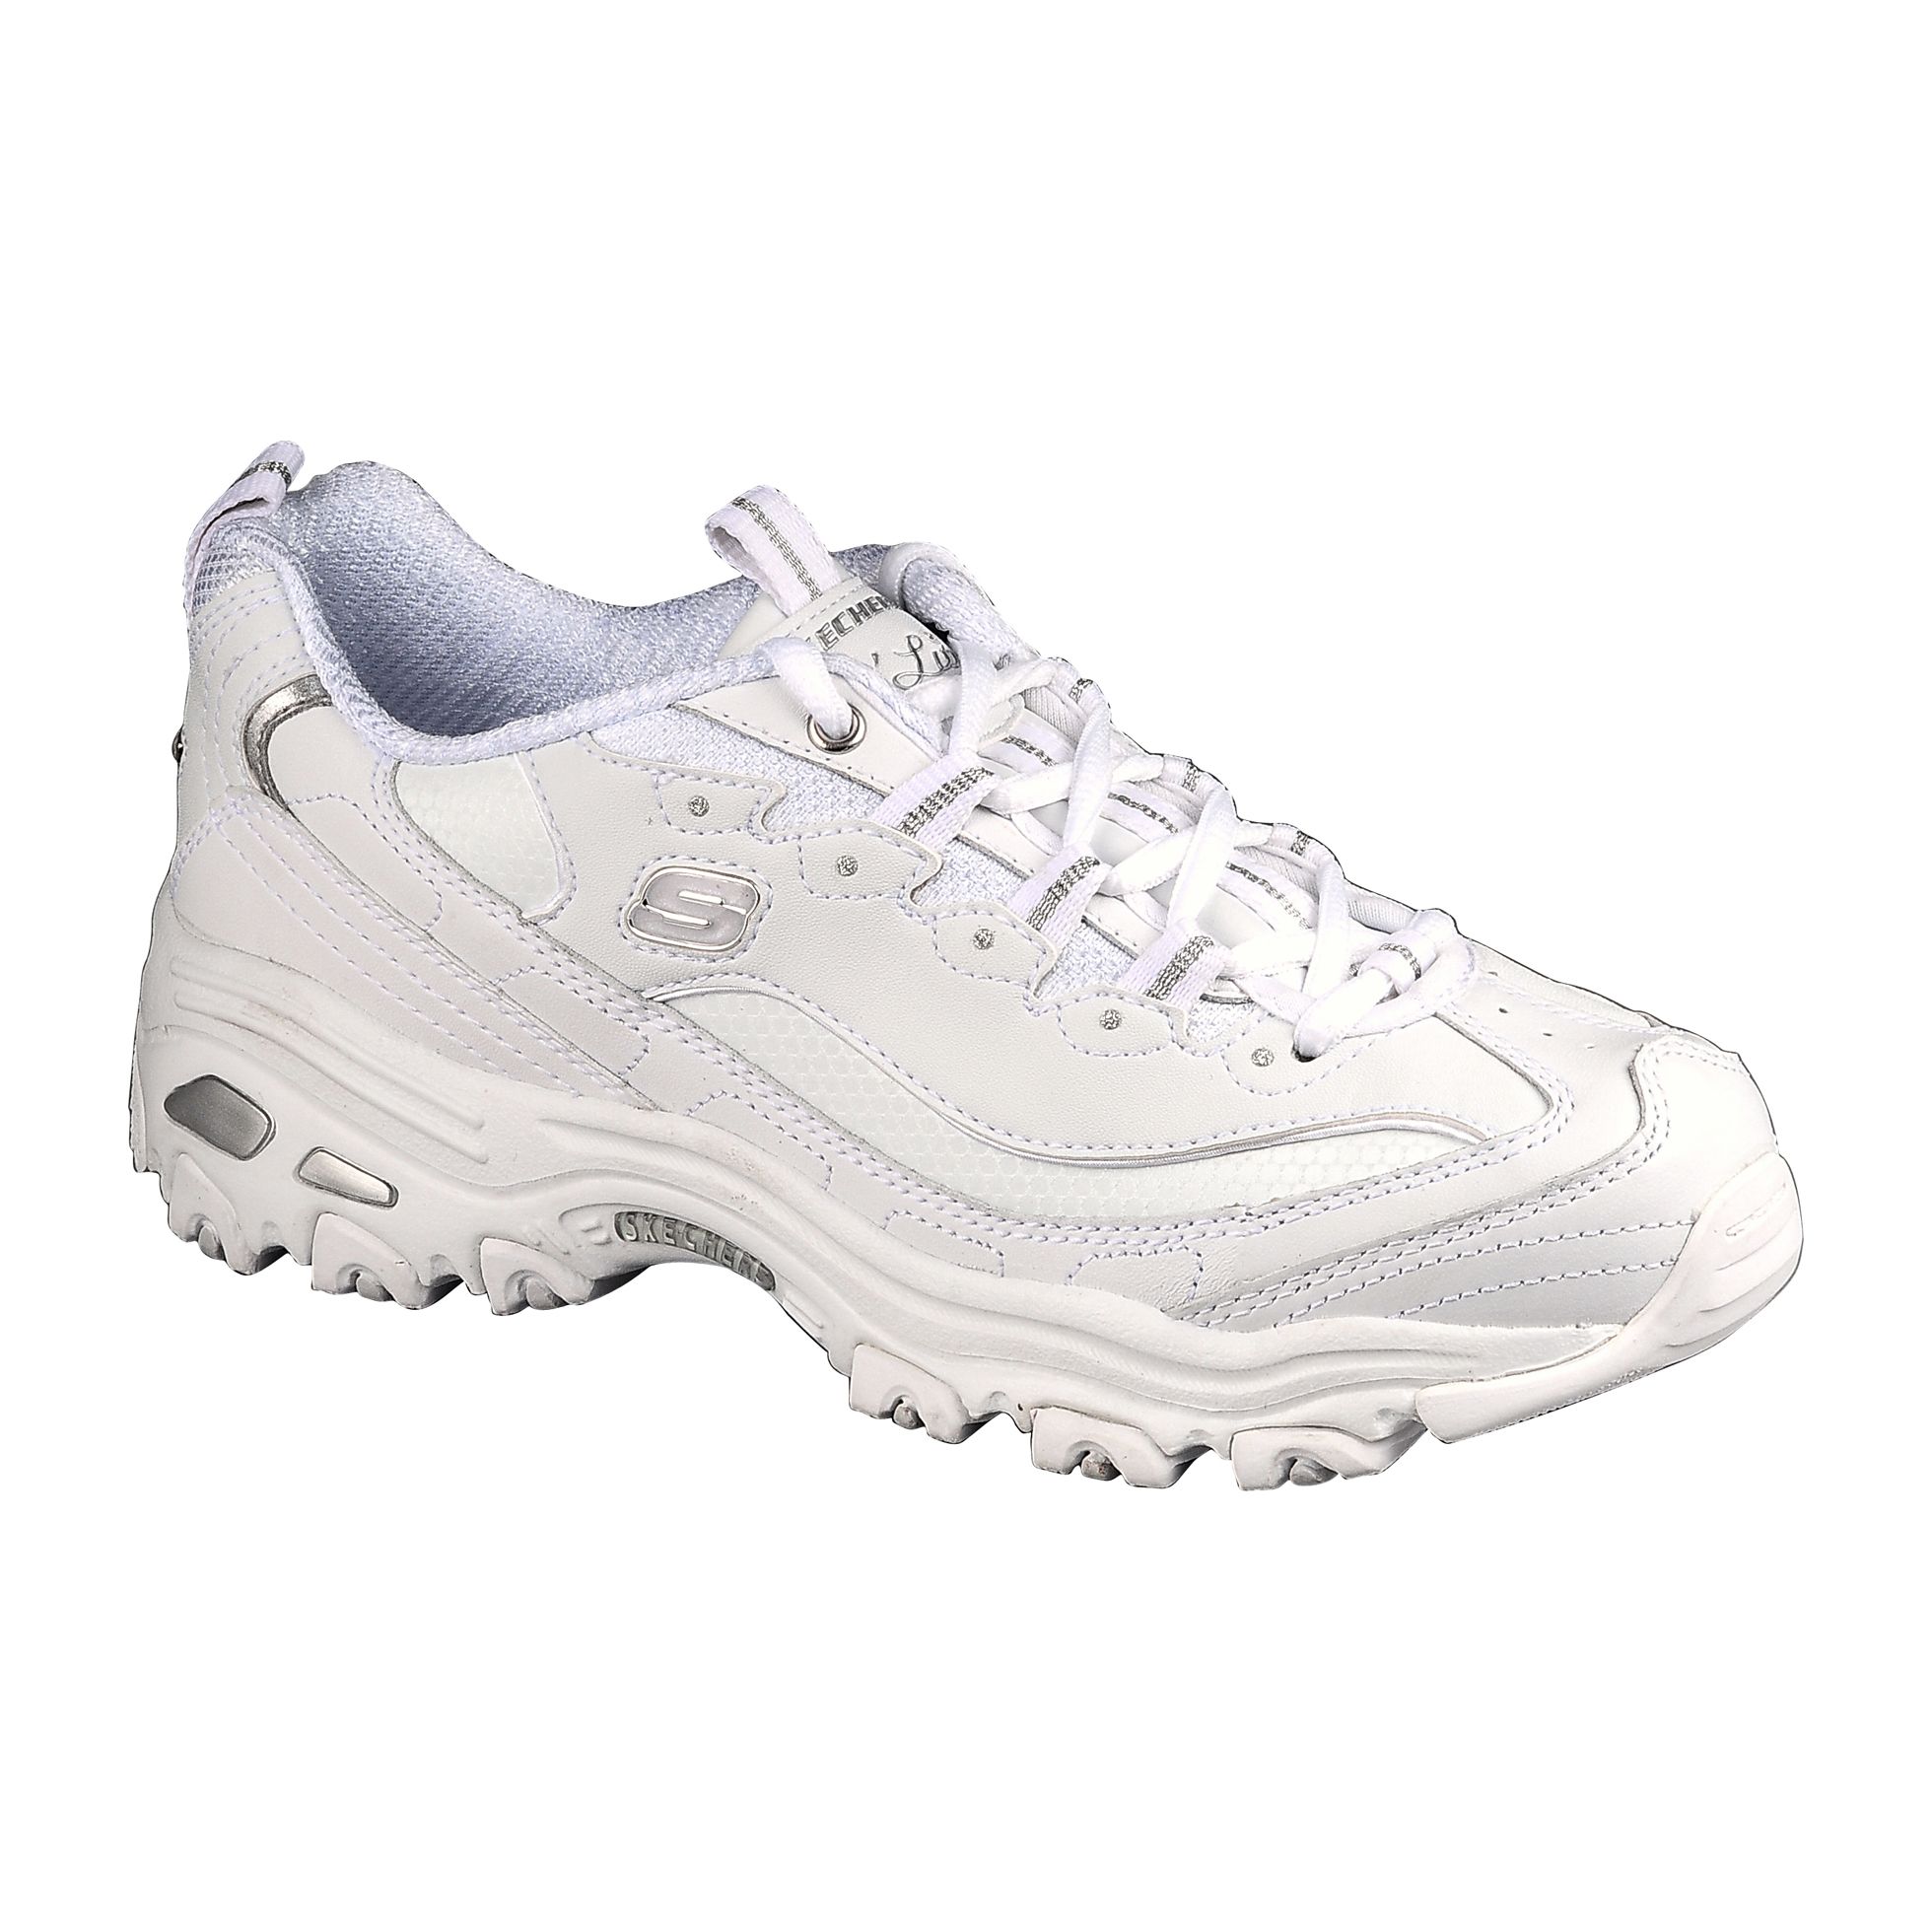 Women's D'lite Flourish Athletic Shoe - Silver/White